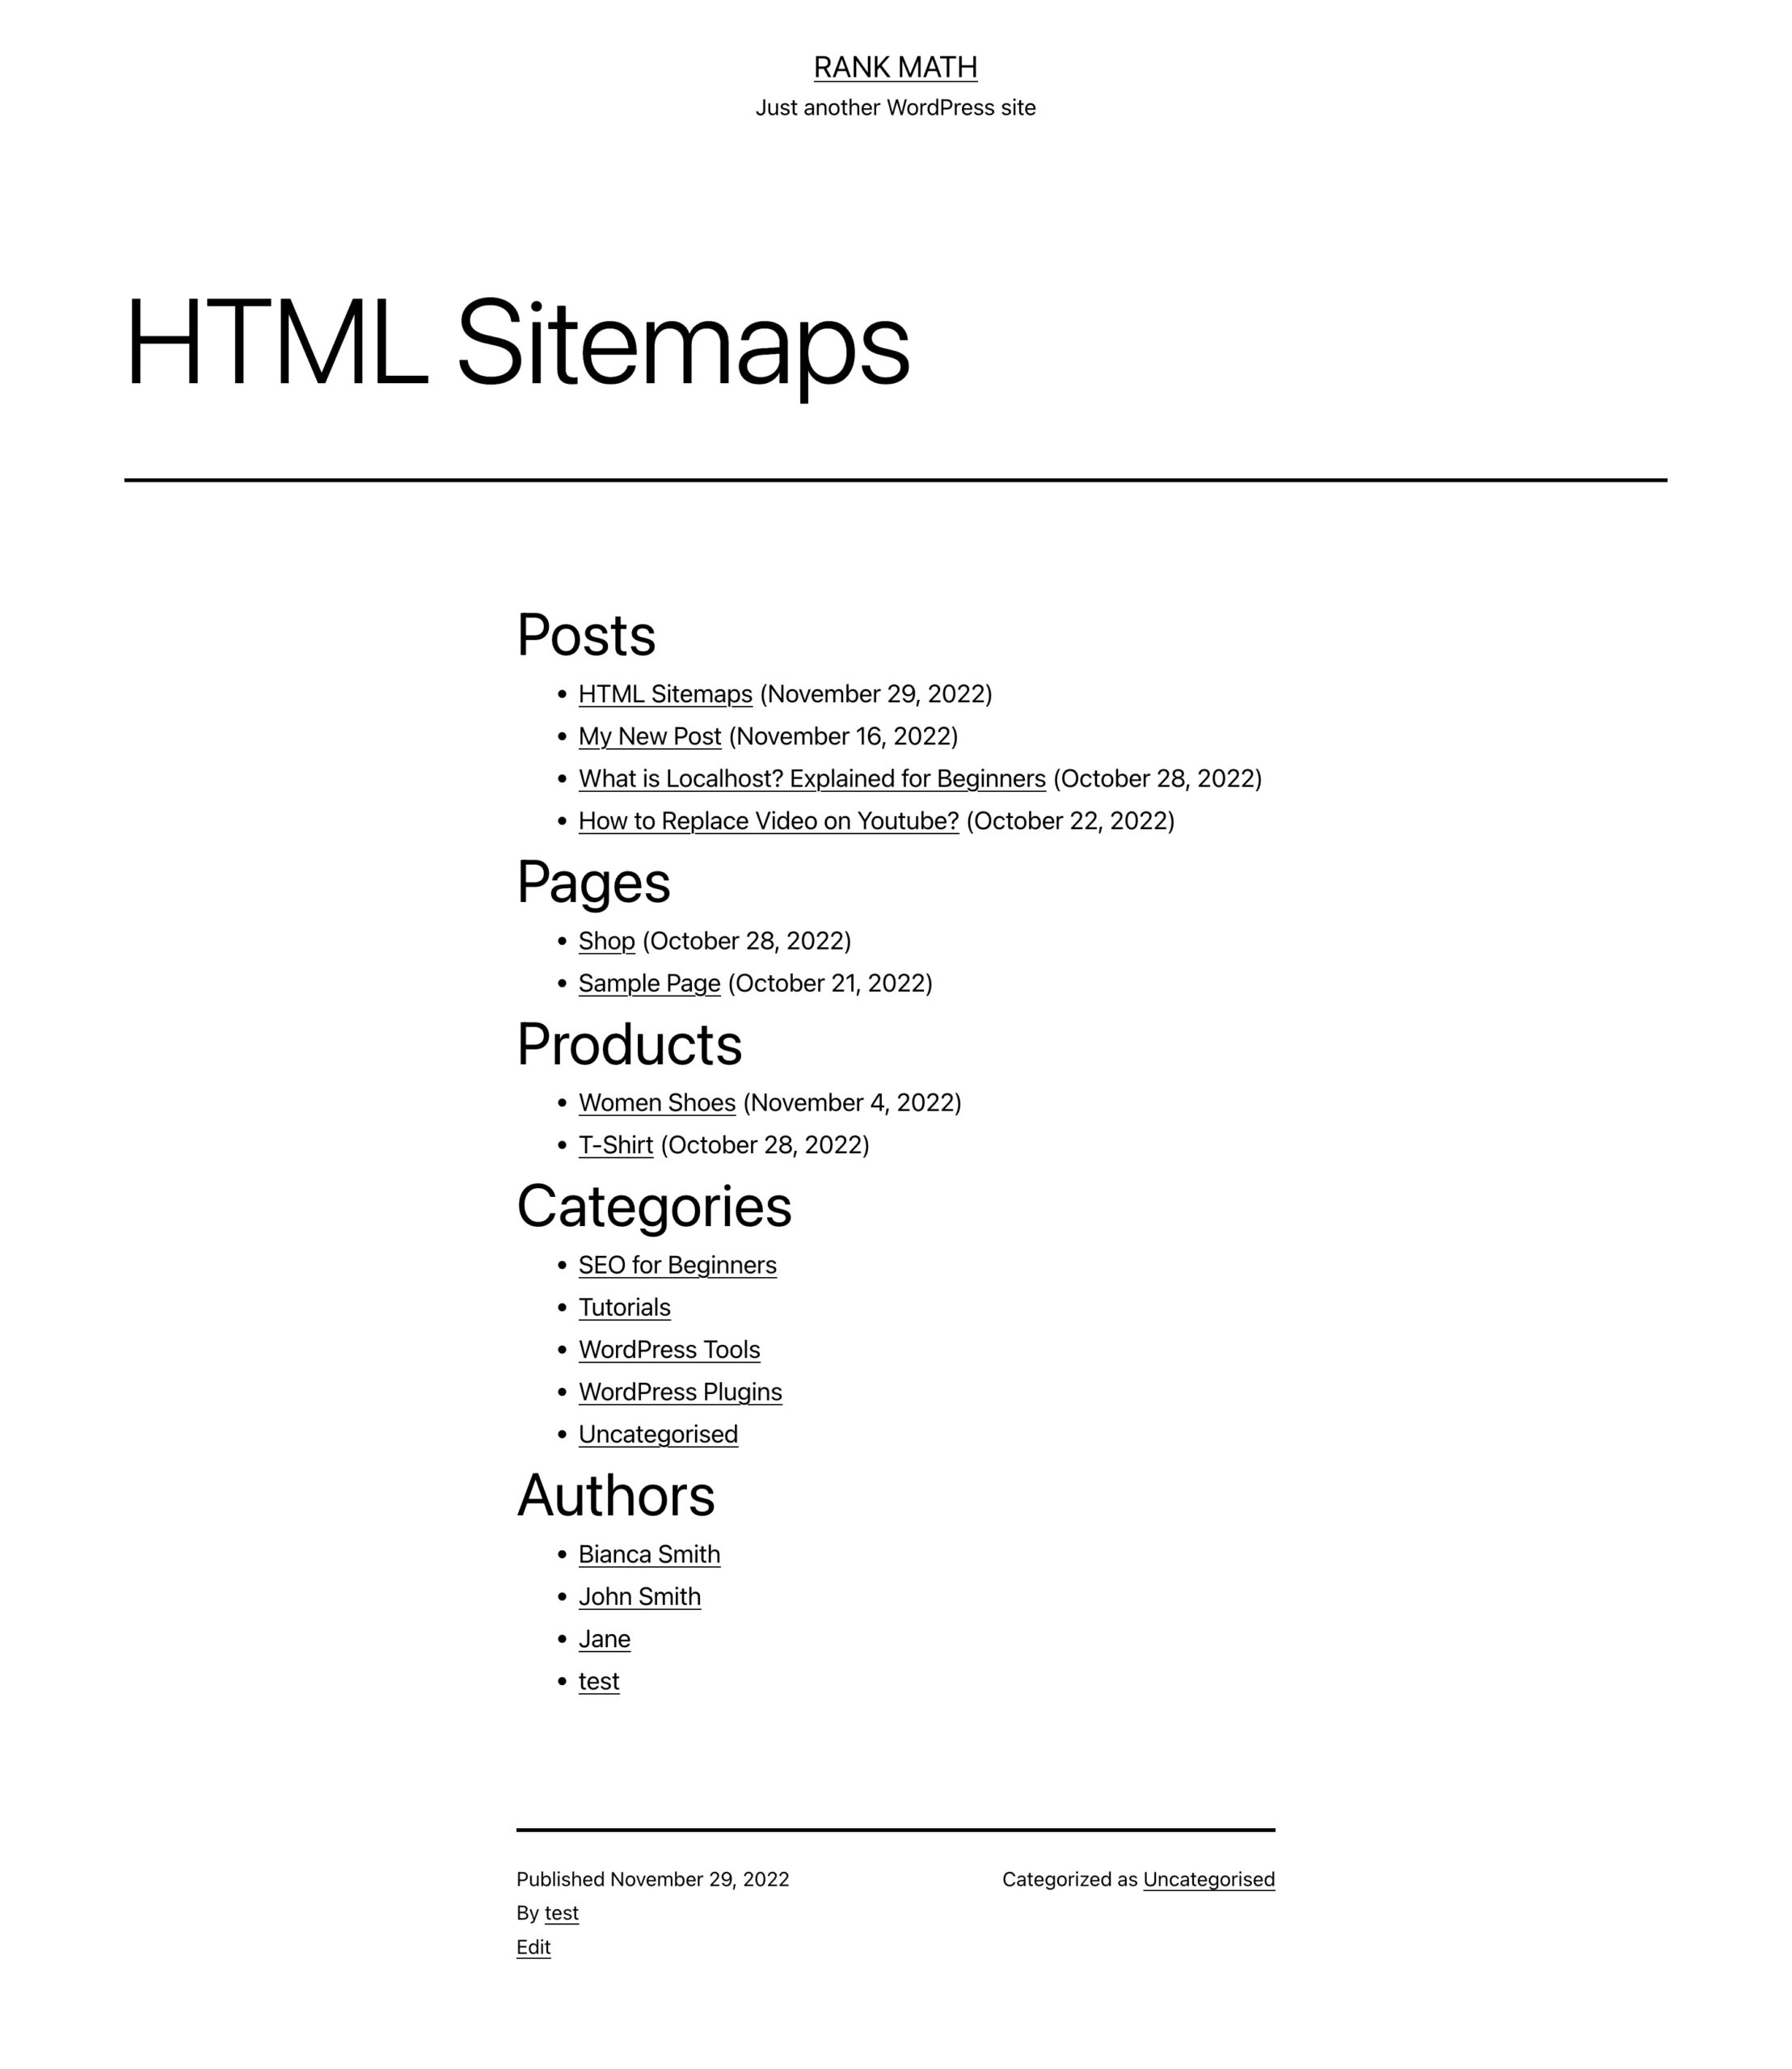 HTML sitemap displayed